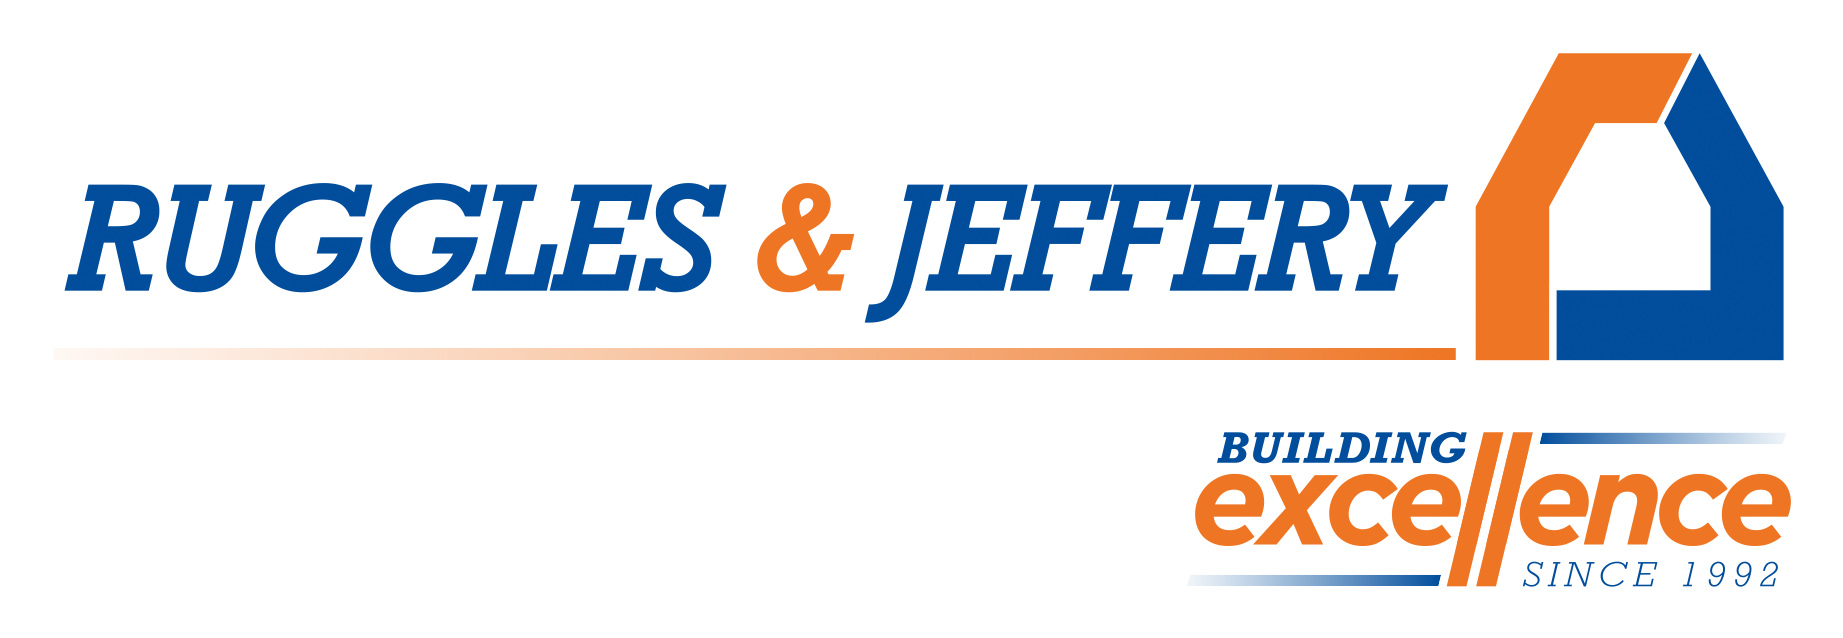 logo for Ruggles & Jeffery Ltd